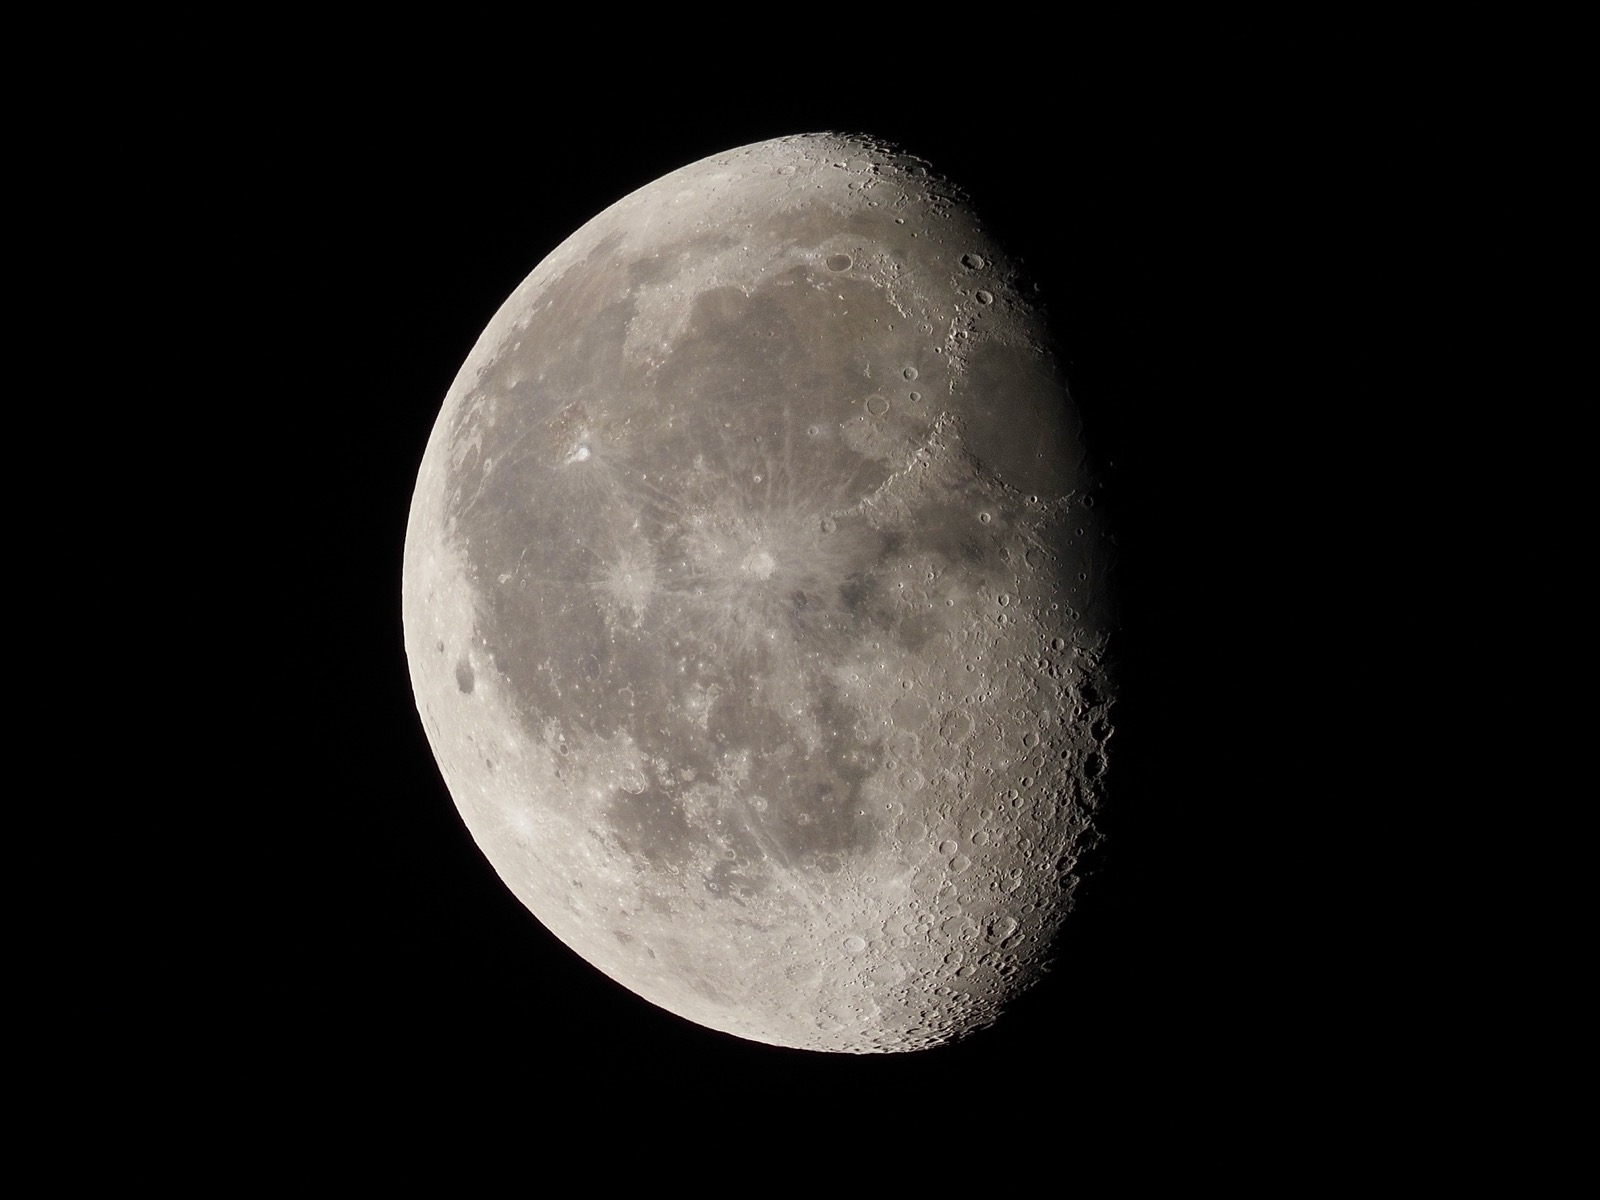 Closeup of the waning gibbous moon, 77% illuminated.